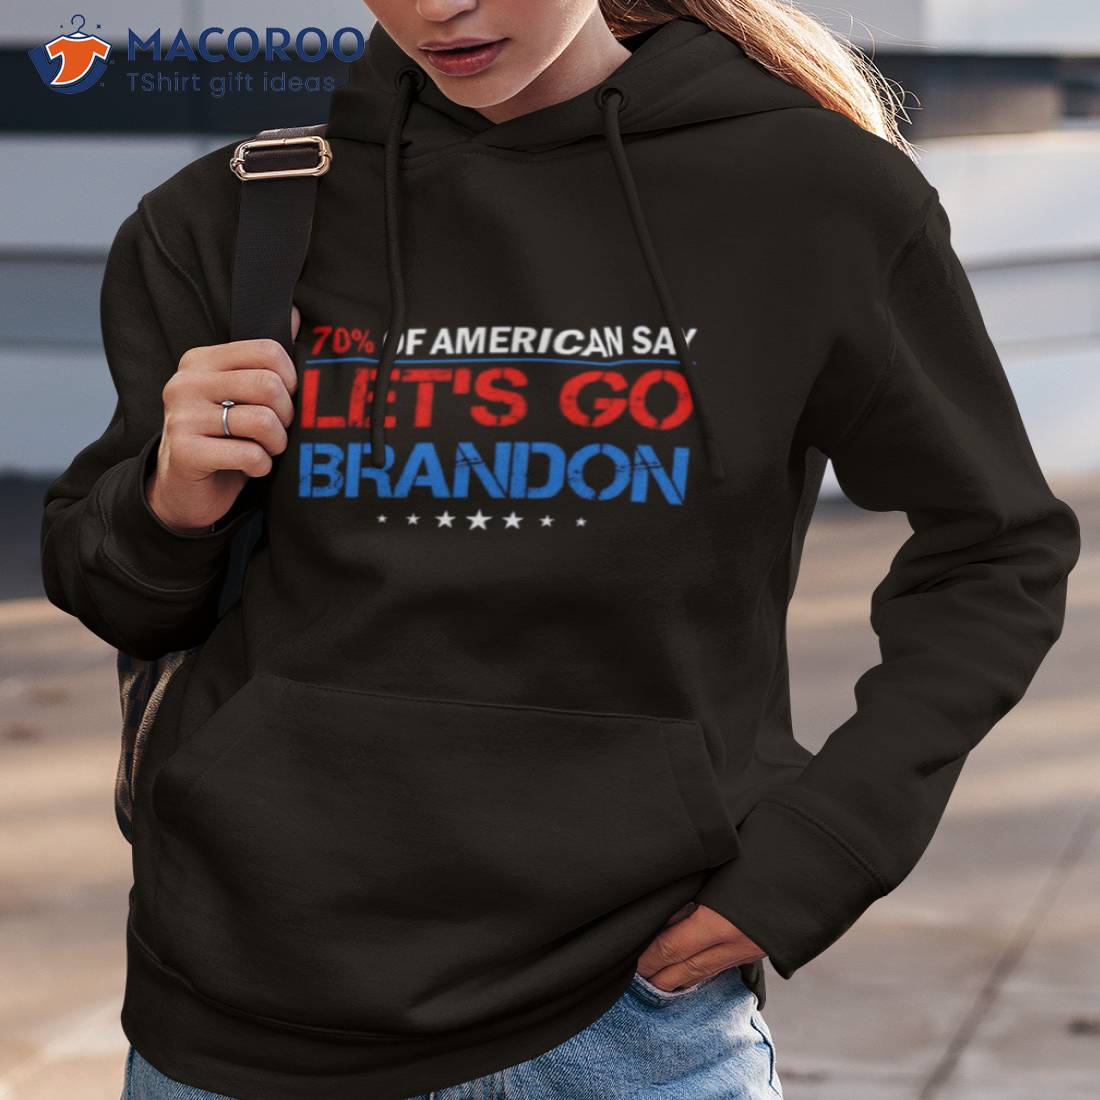 70% Of American Say Let's Go Brandon Shirt